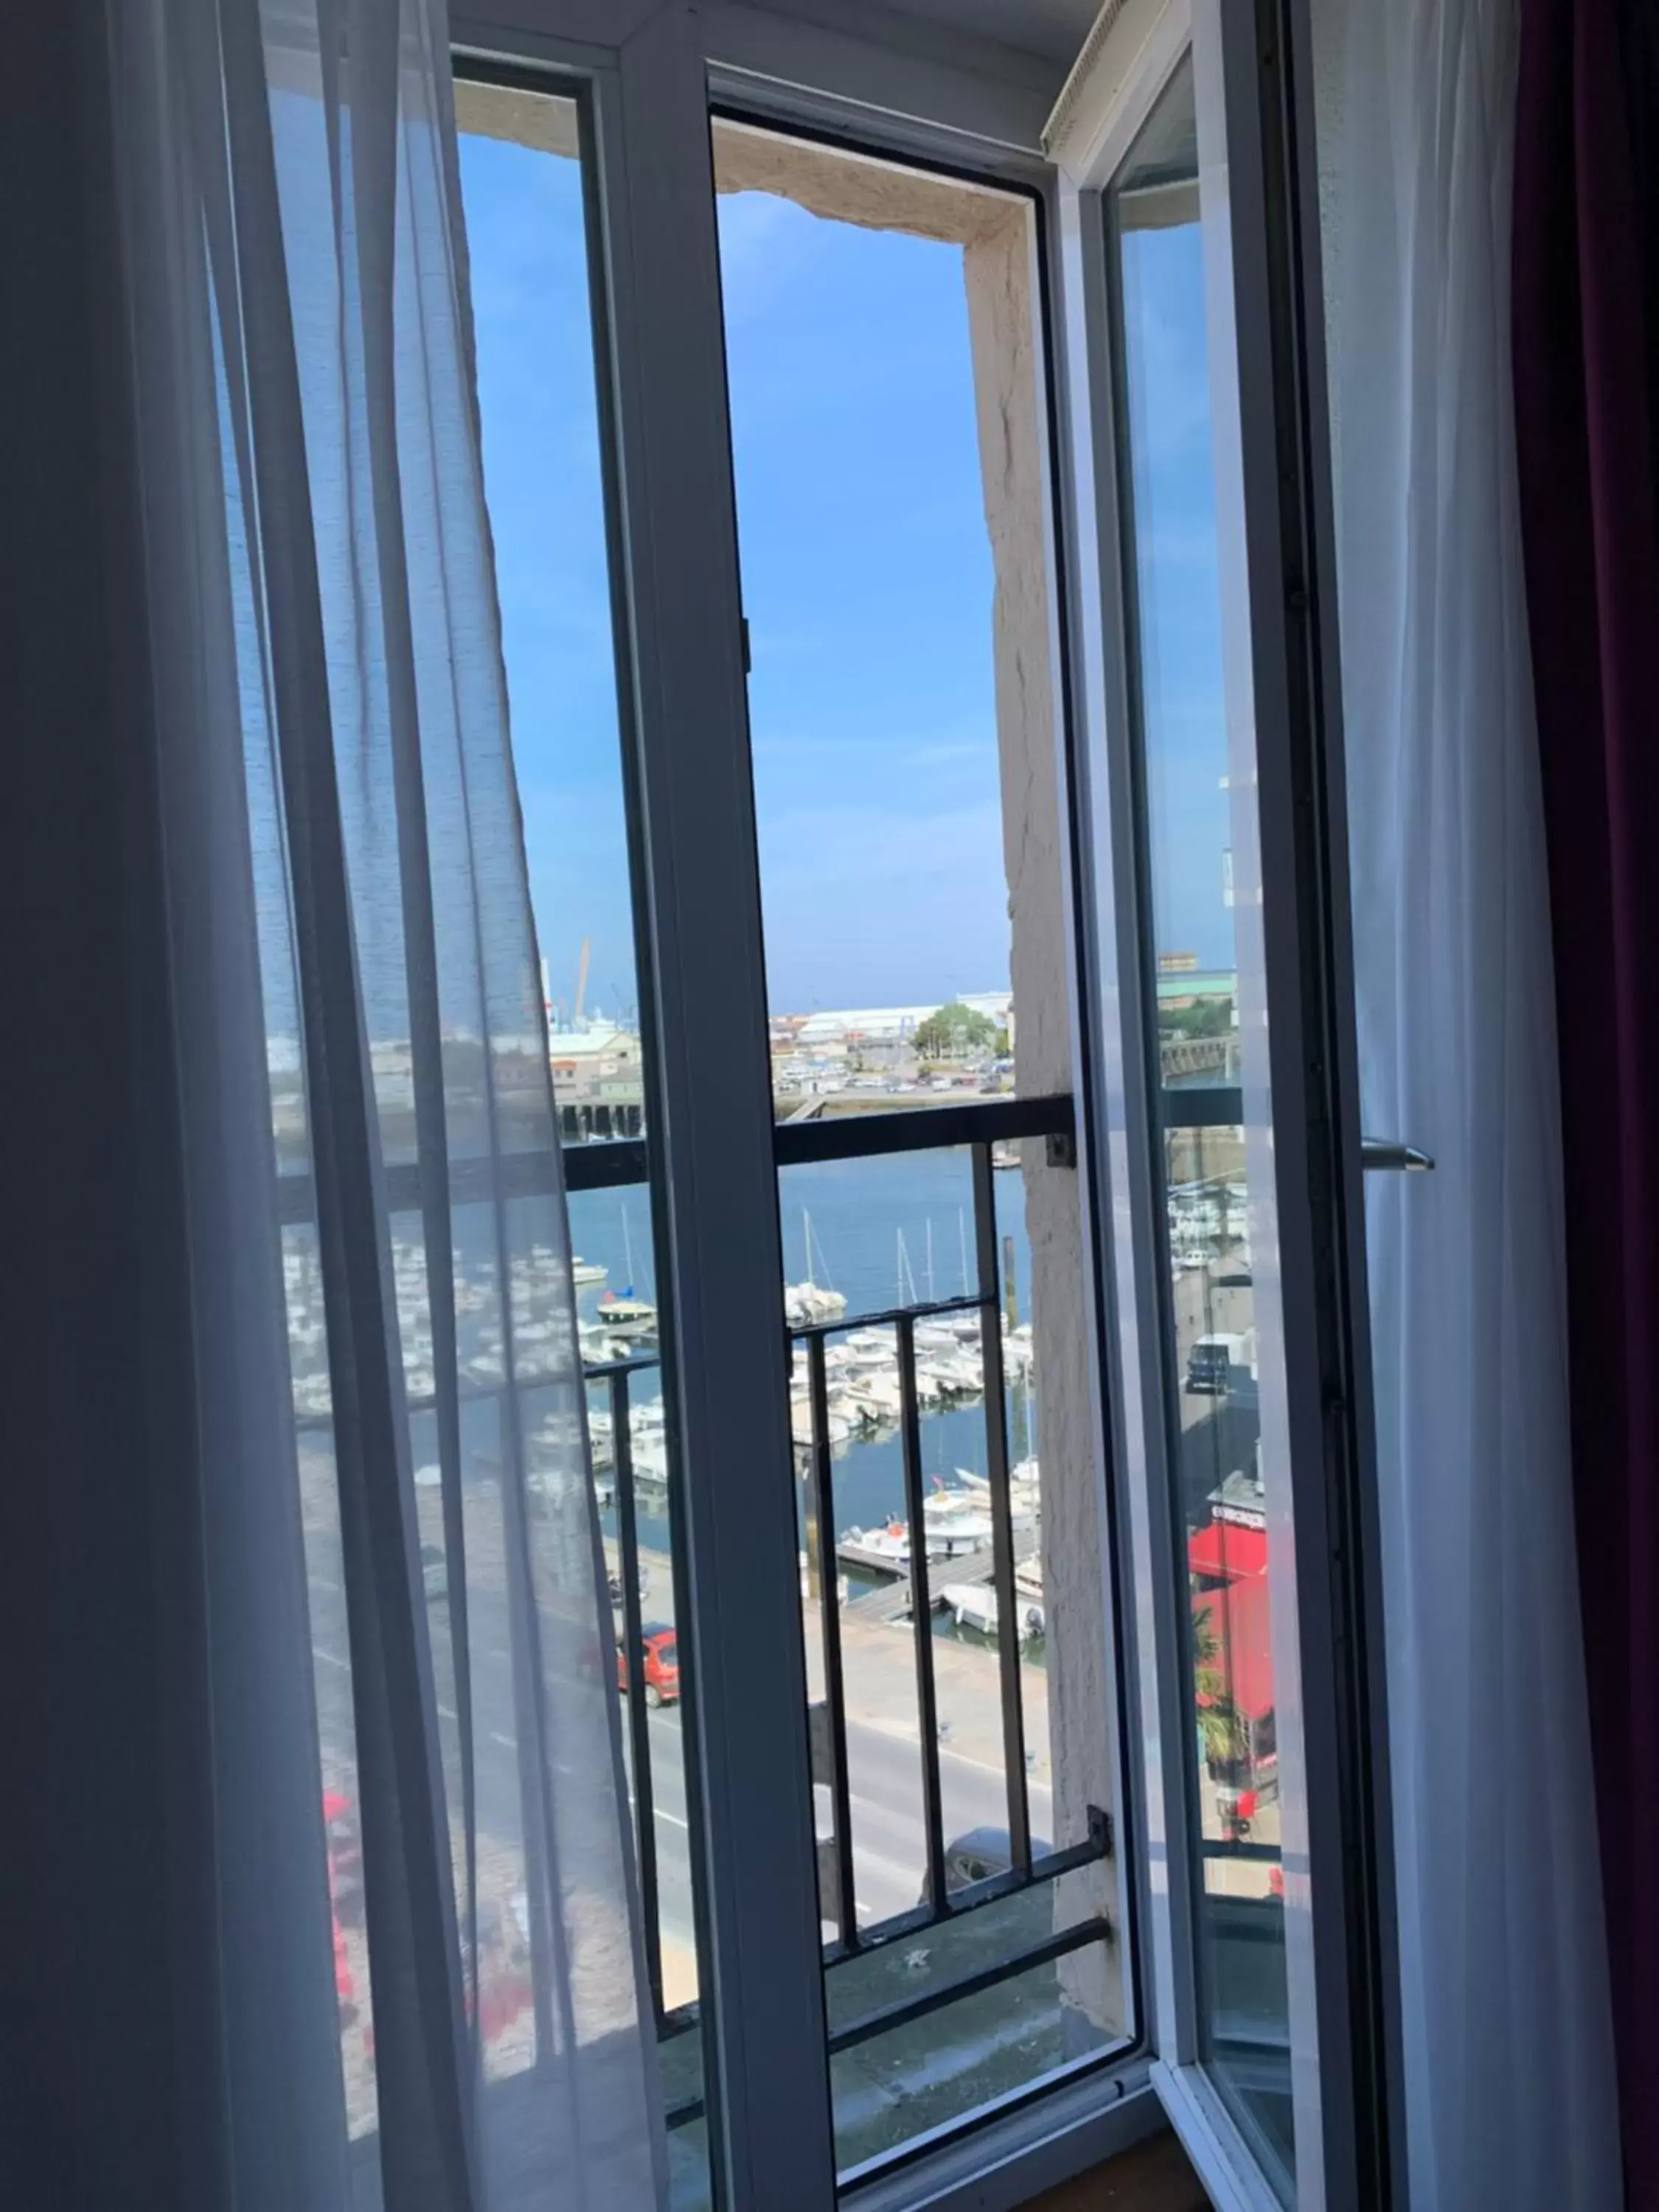 Sea View in Ambassadeur Hotel - Cherbourg Port de Plaisance